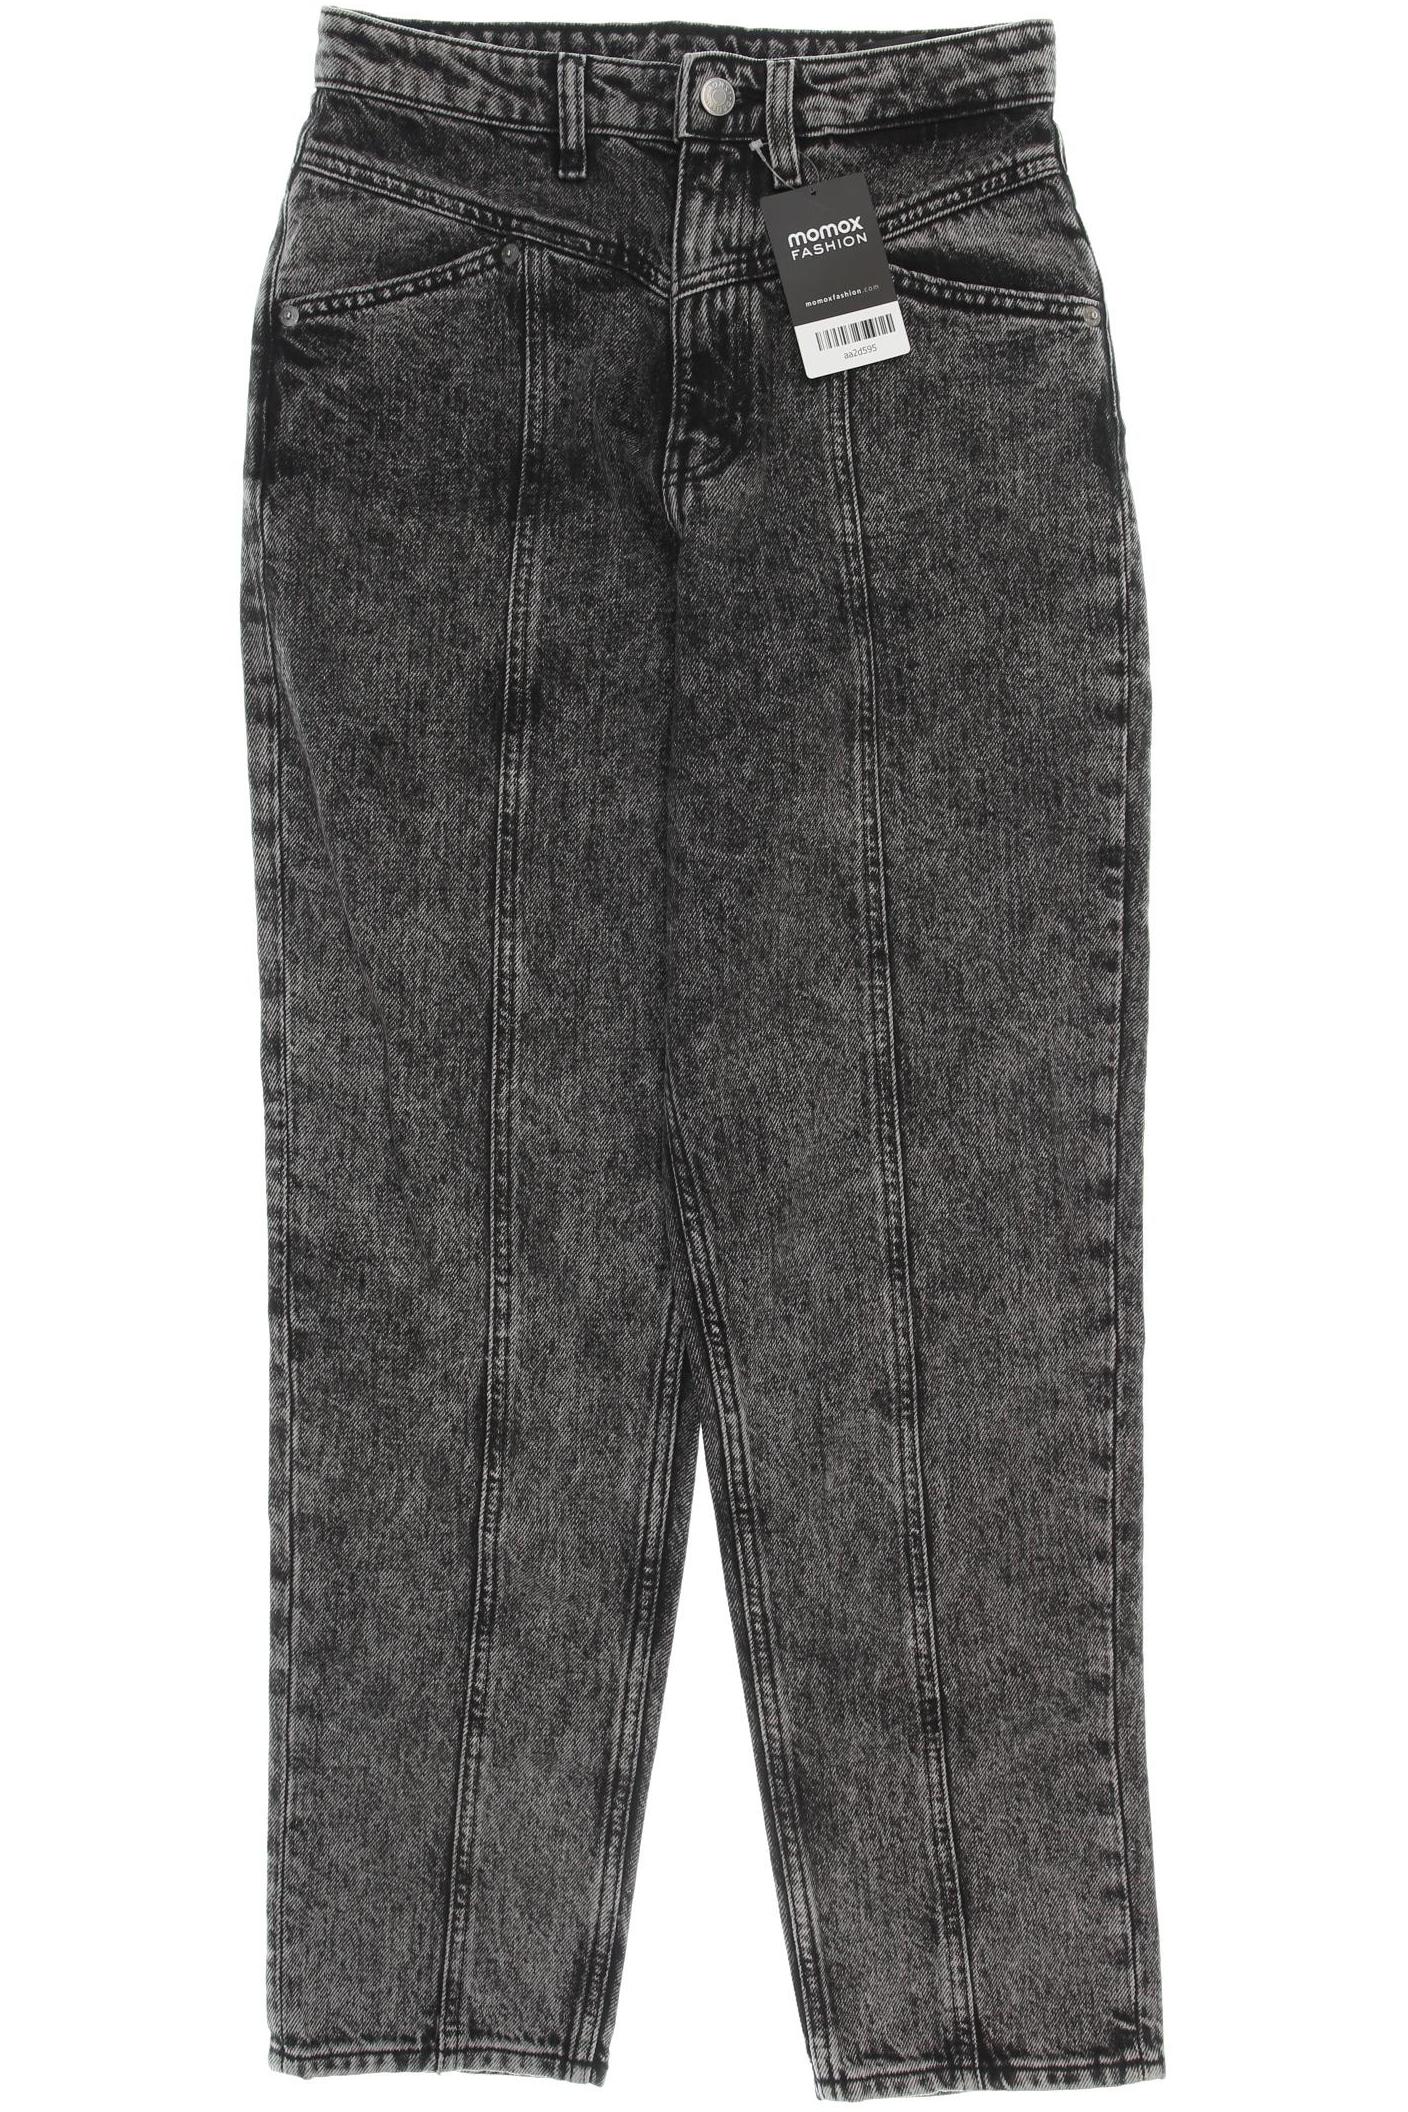 Monki Damen Jeans, grau, Gr. 36 von Monki